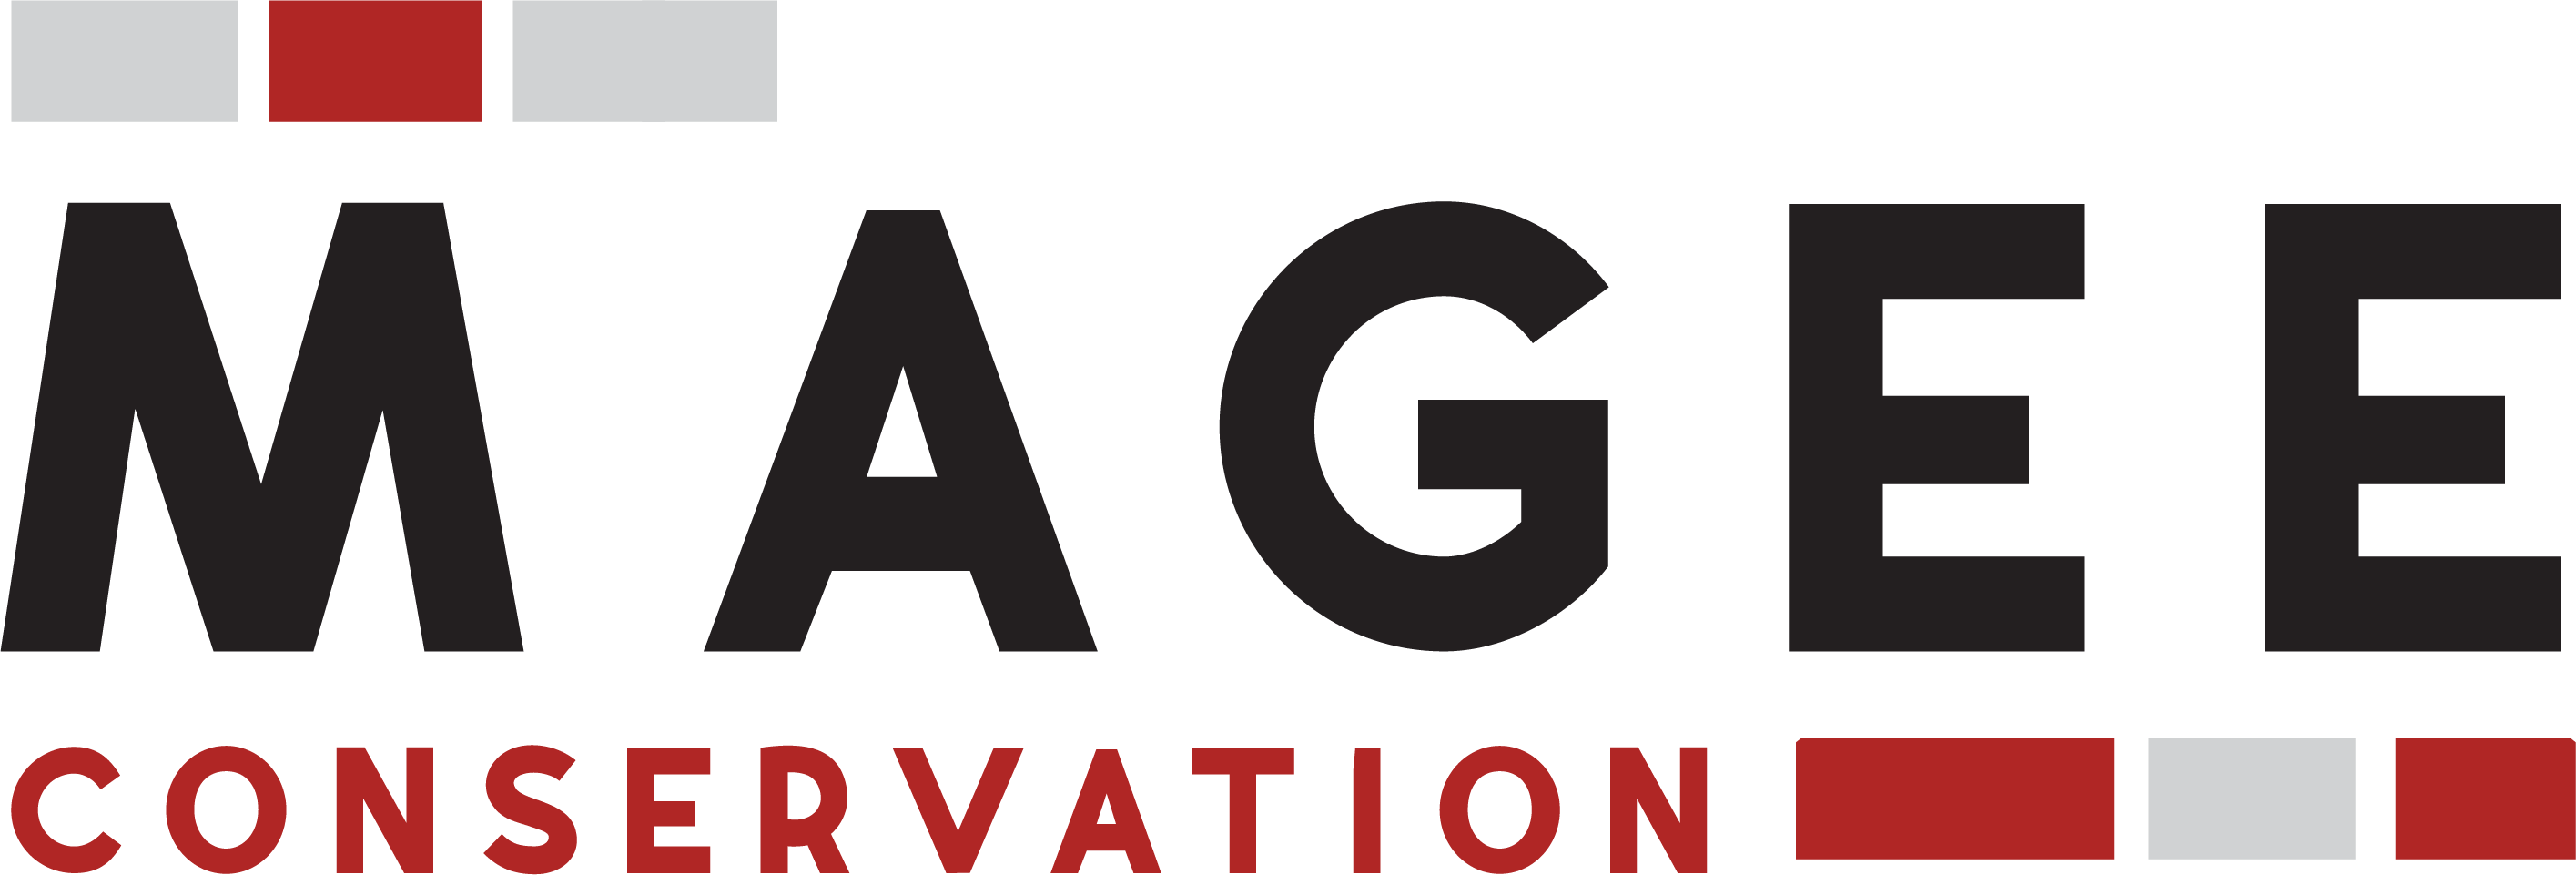 Magee conservation & restoration logo